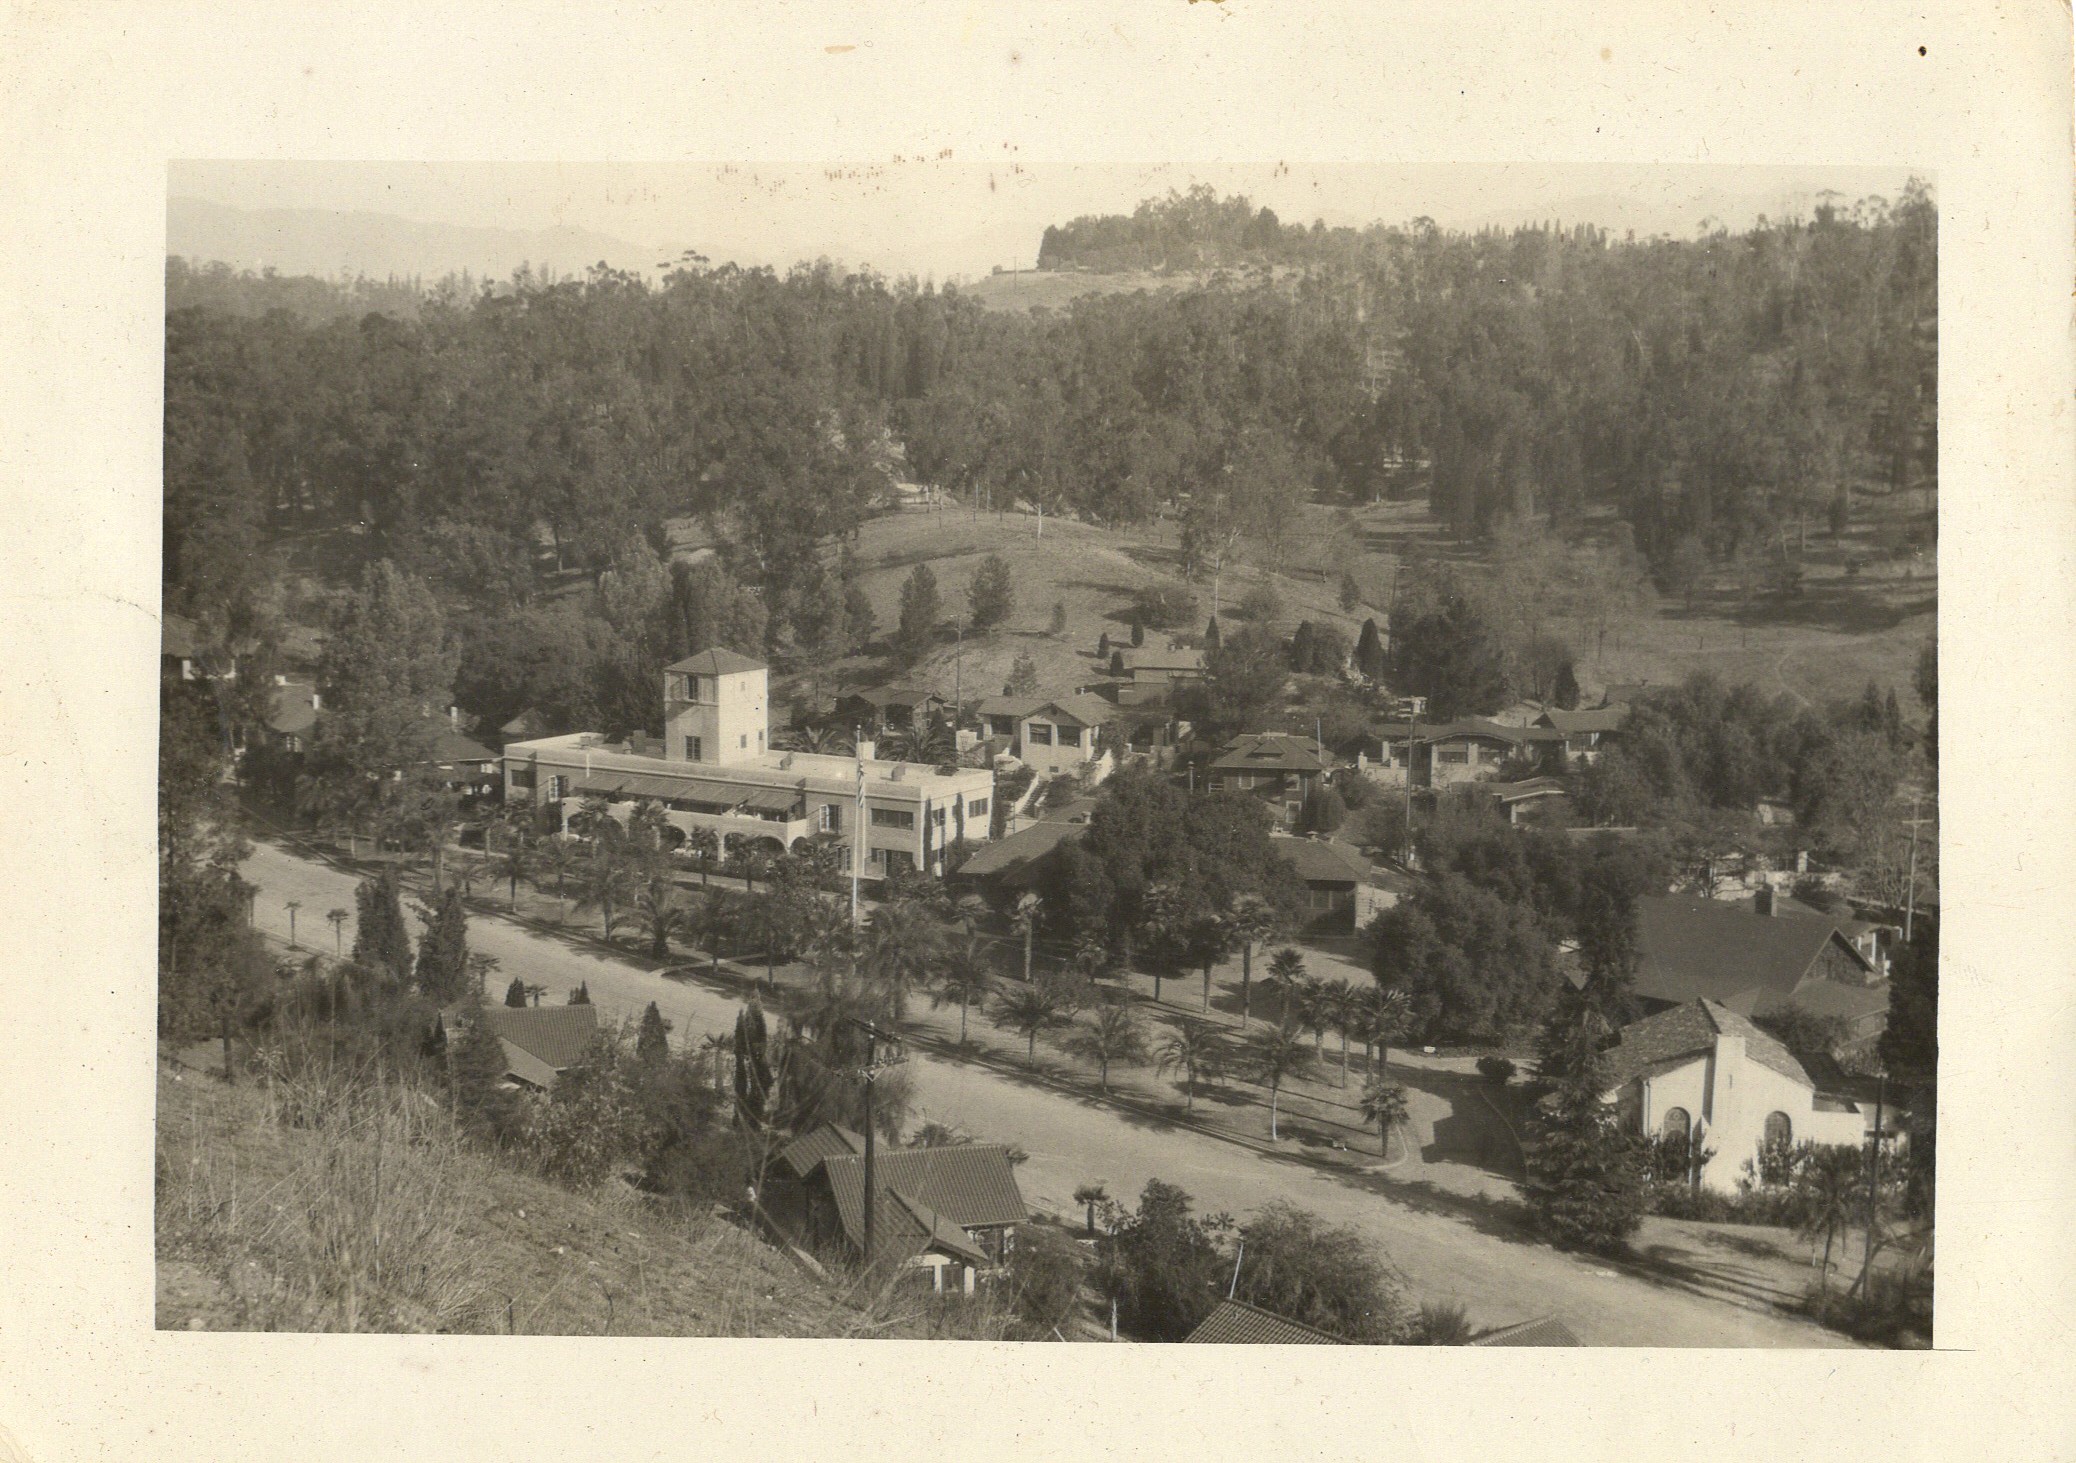 Barlow Campus Circa 1927